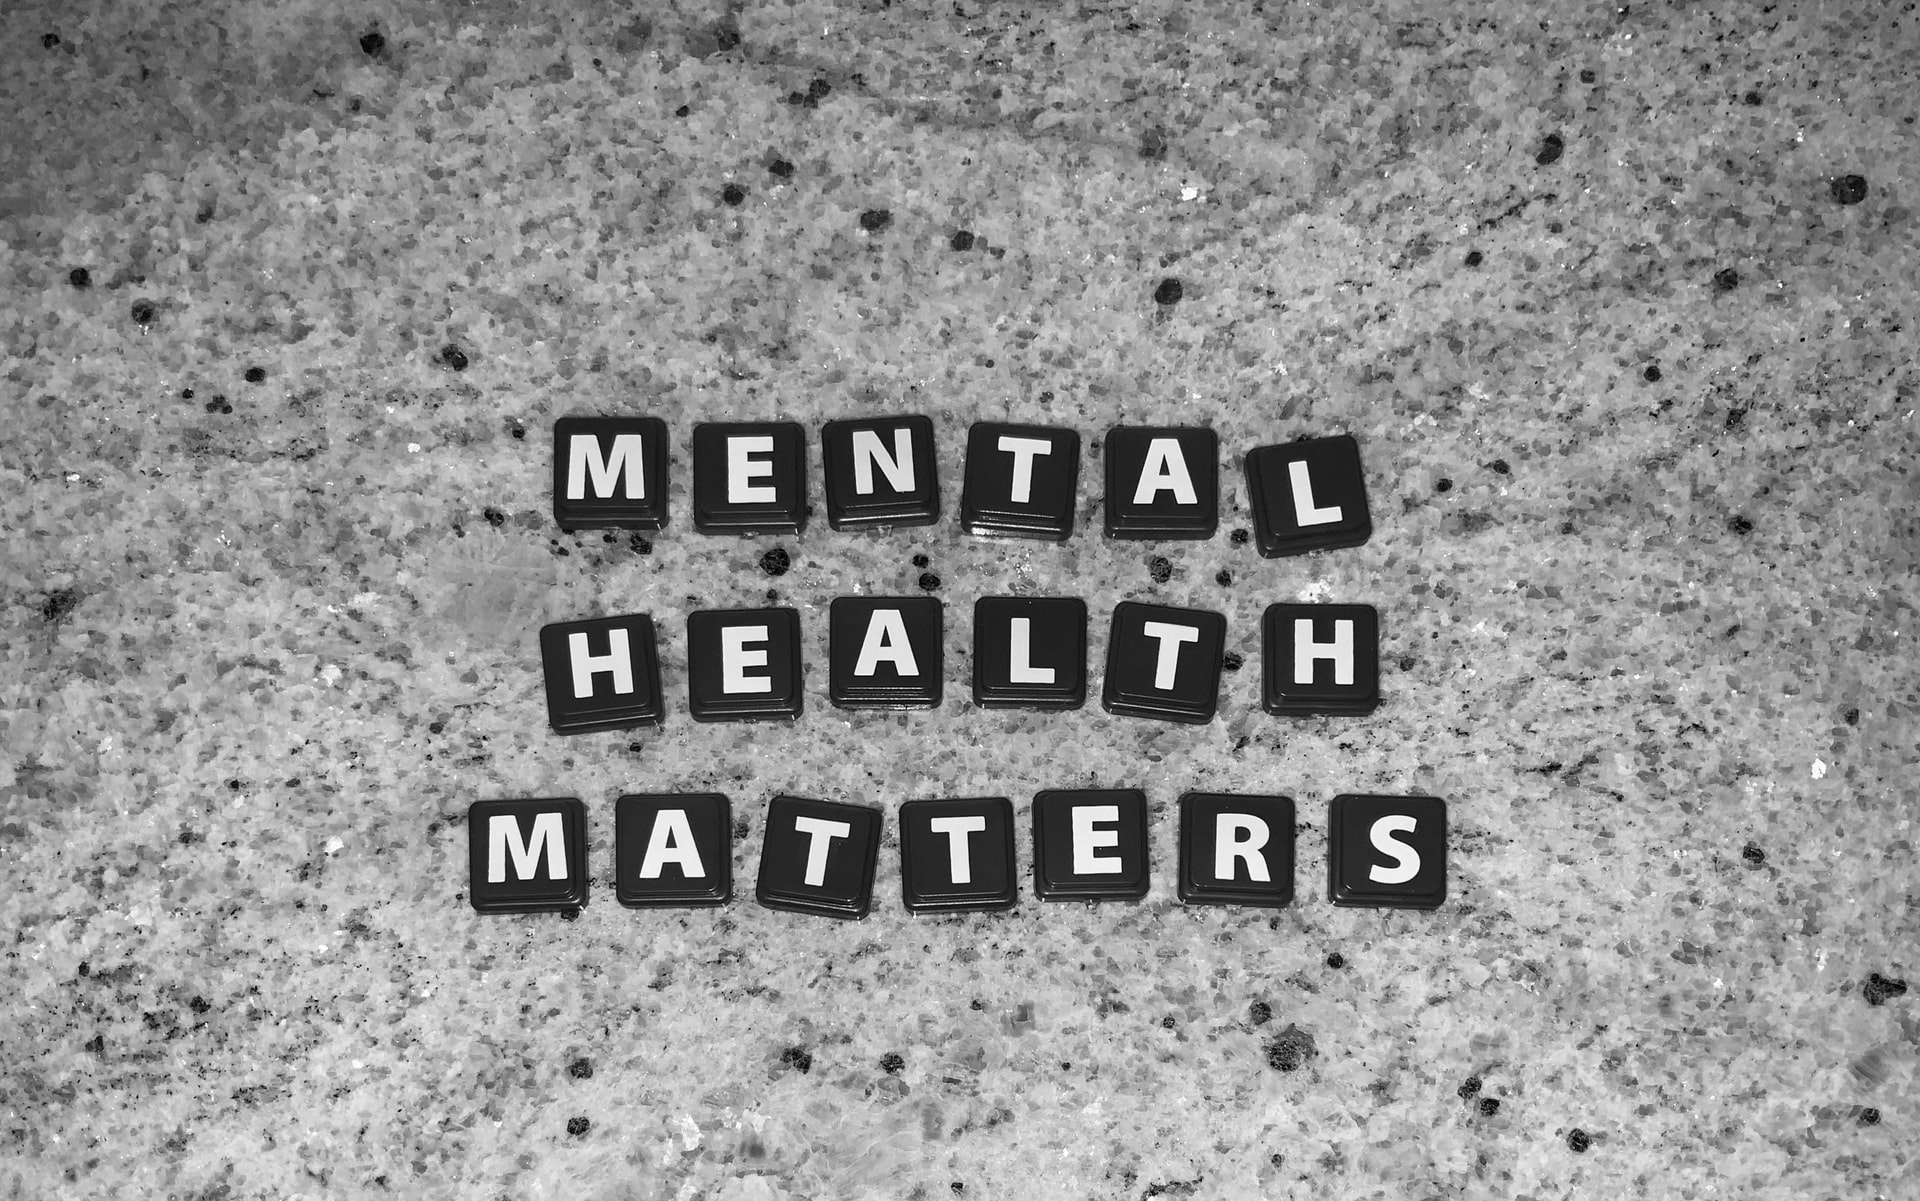 tiles spelling mental health matters